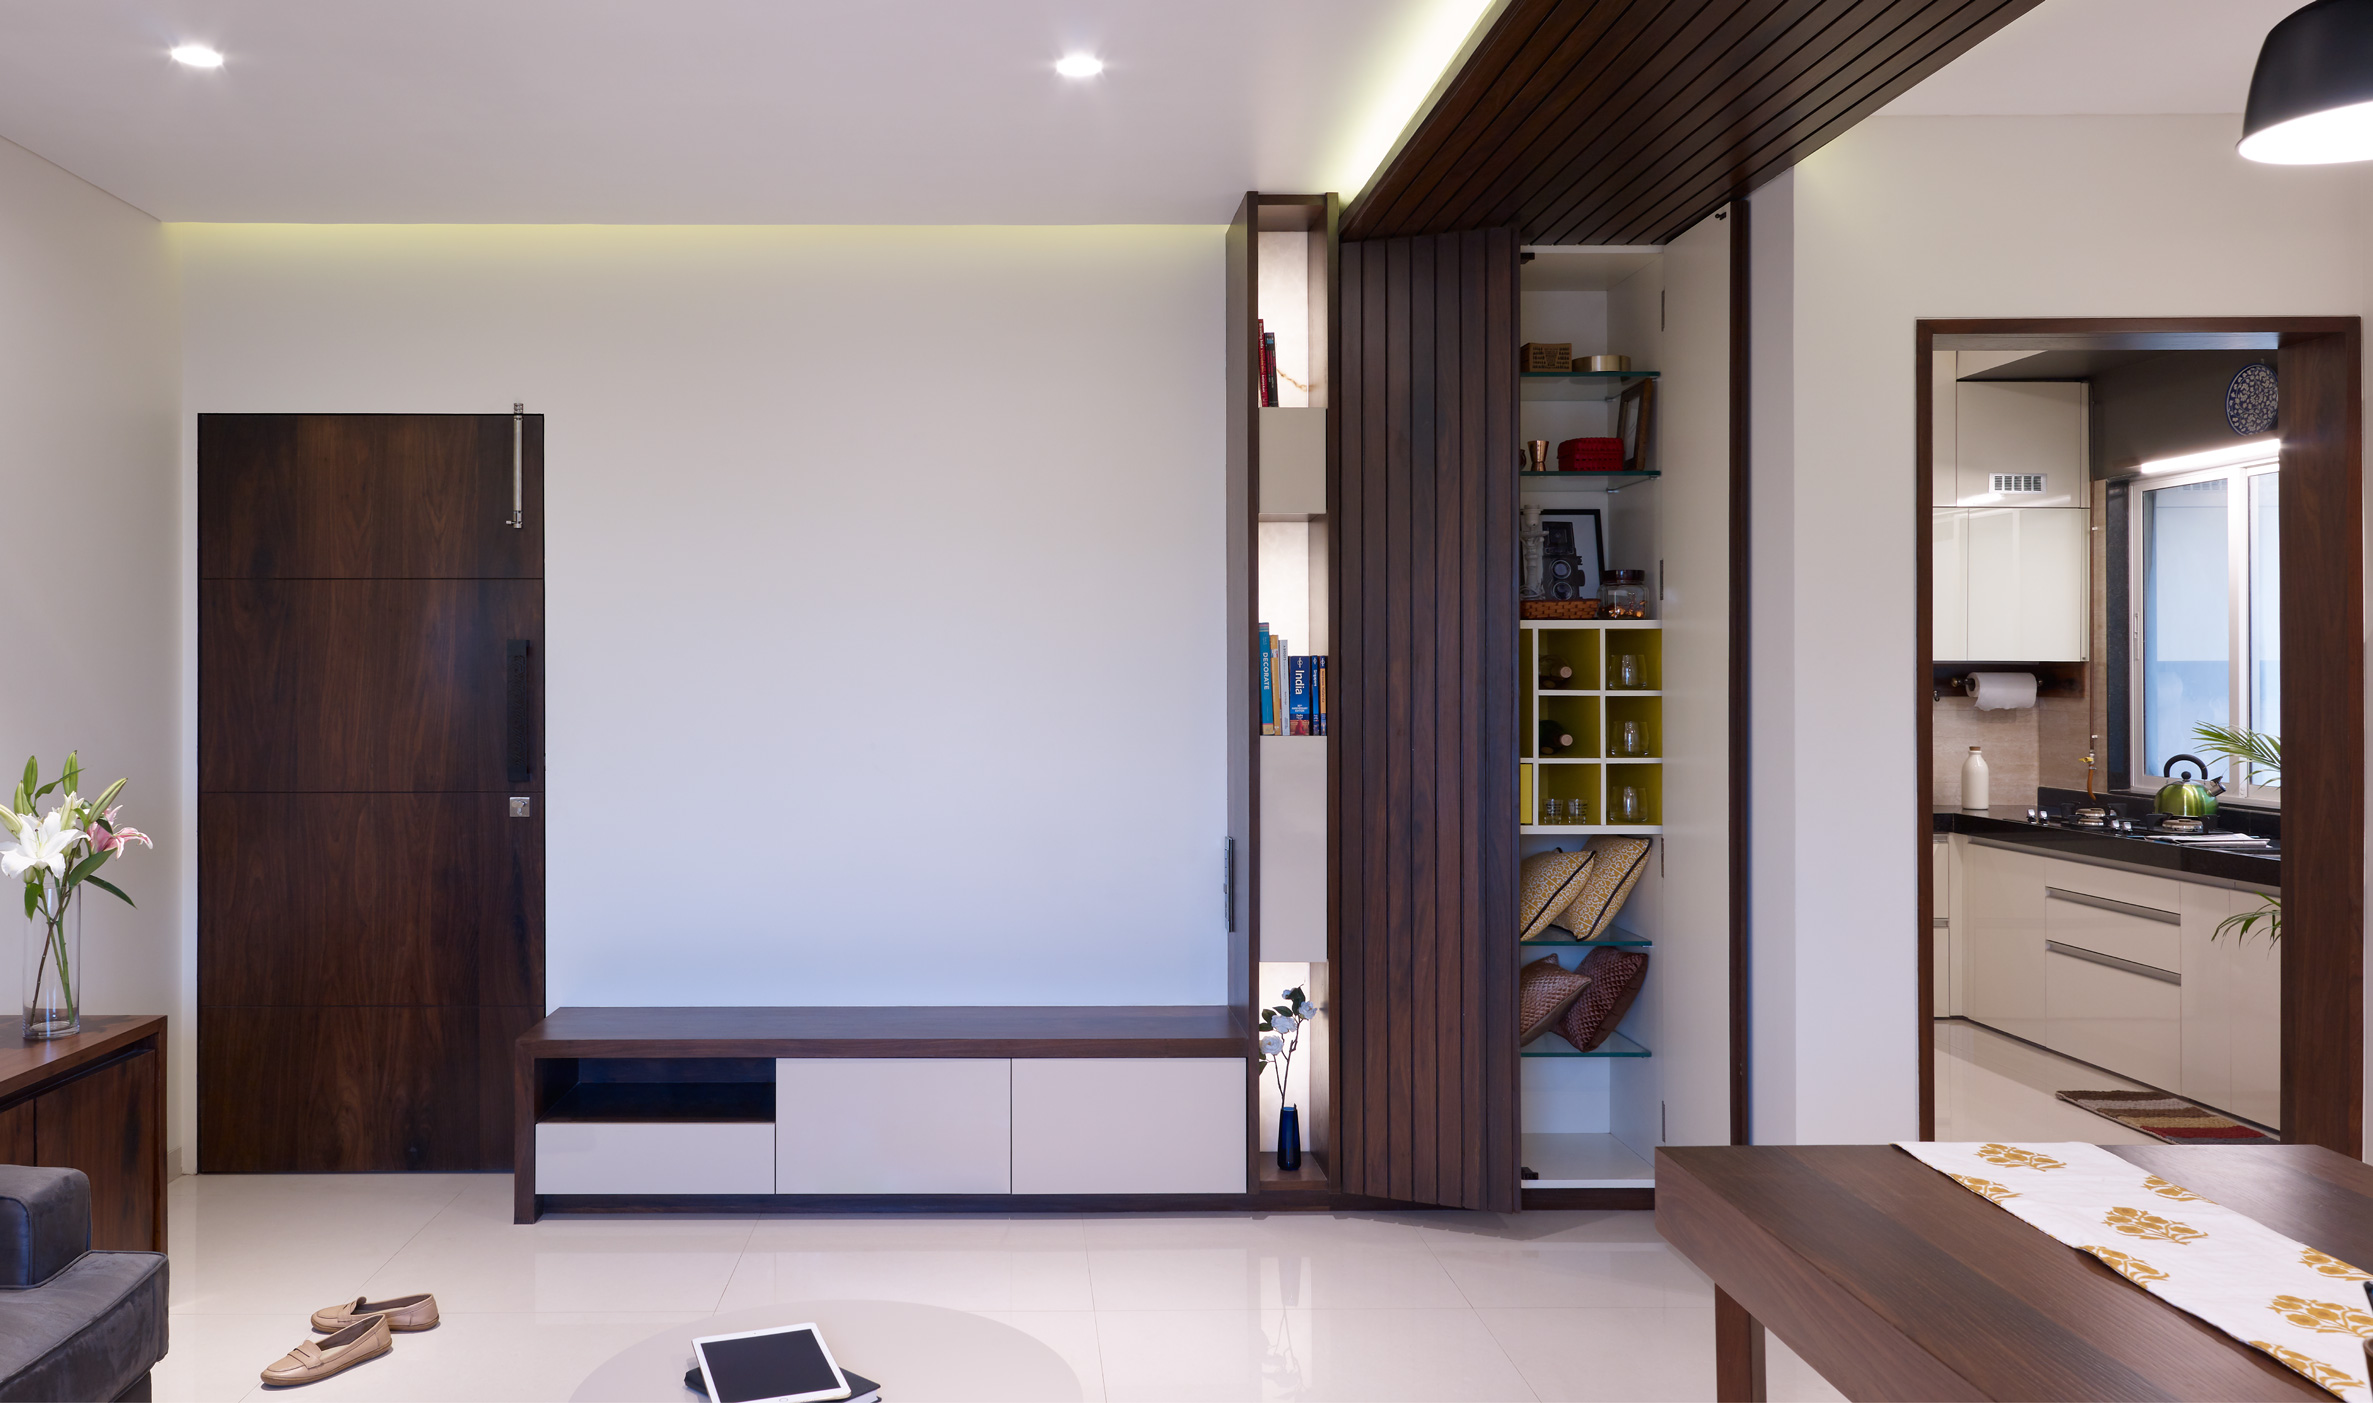 interior design by inscape design, inscape design, home decor, interior design, decor